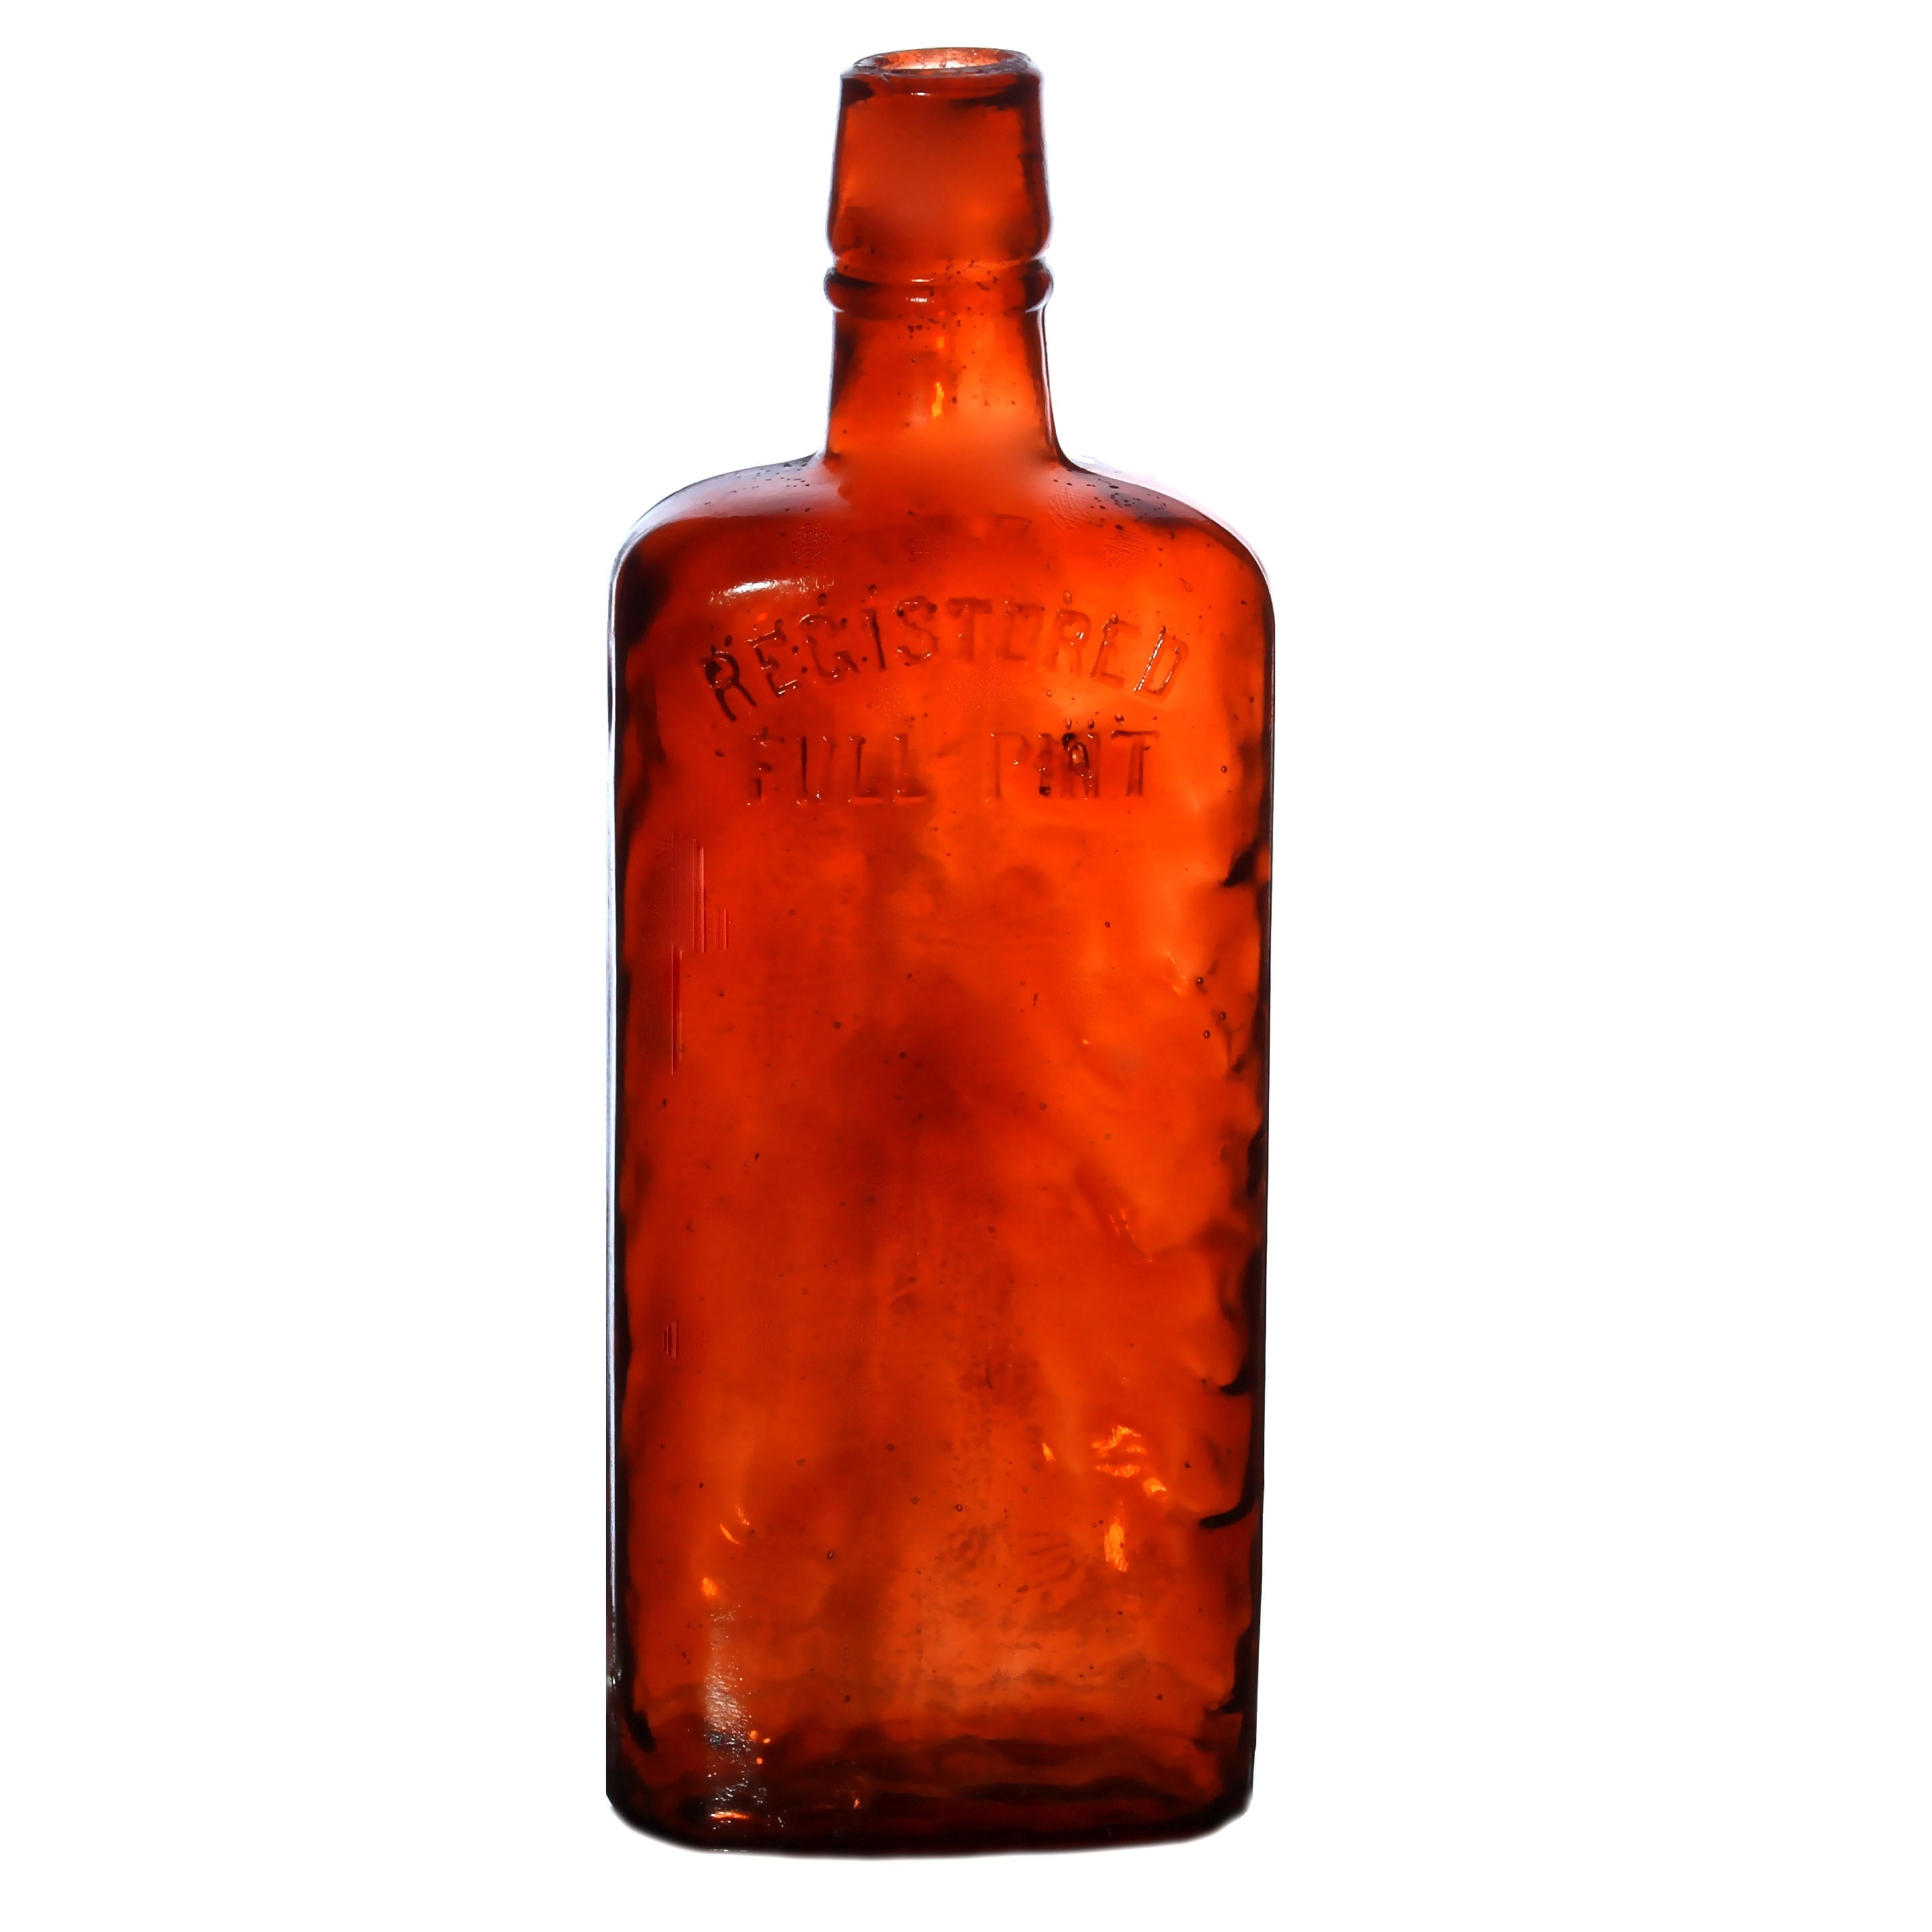 SMASHProps Breakaway Vintage Full Pint Bottle Prop - AMBER BROWN translucent - Amber Brown Translucent